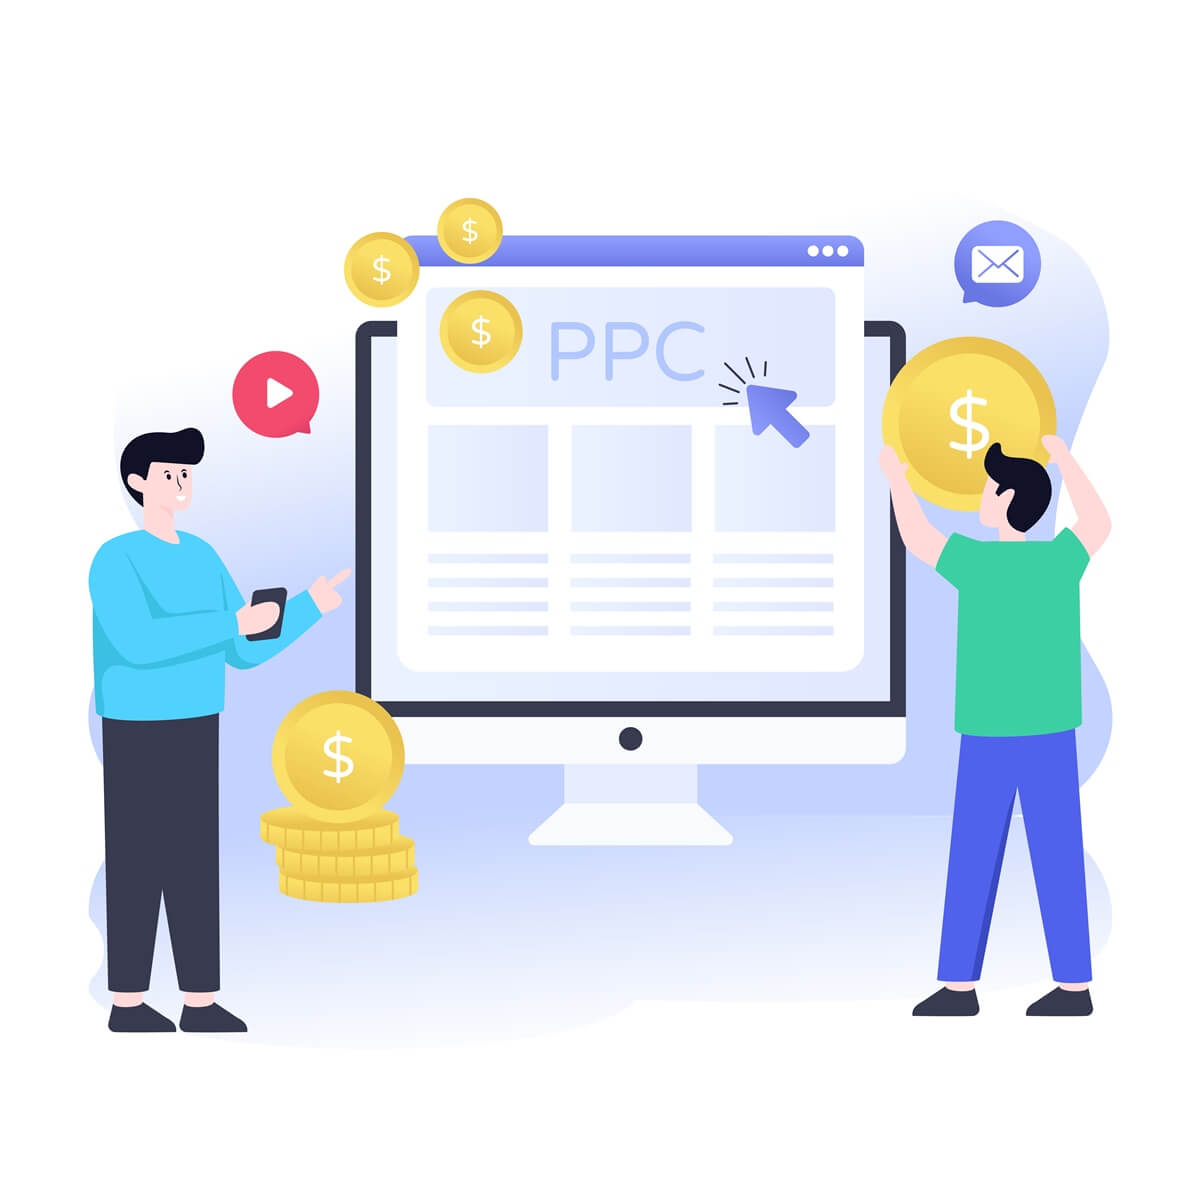 Pay Per Click (PPC) Marketing